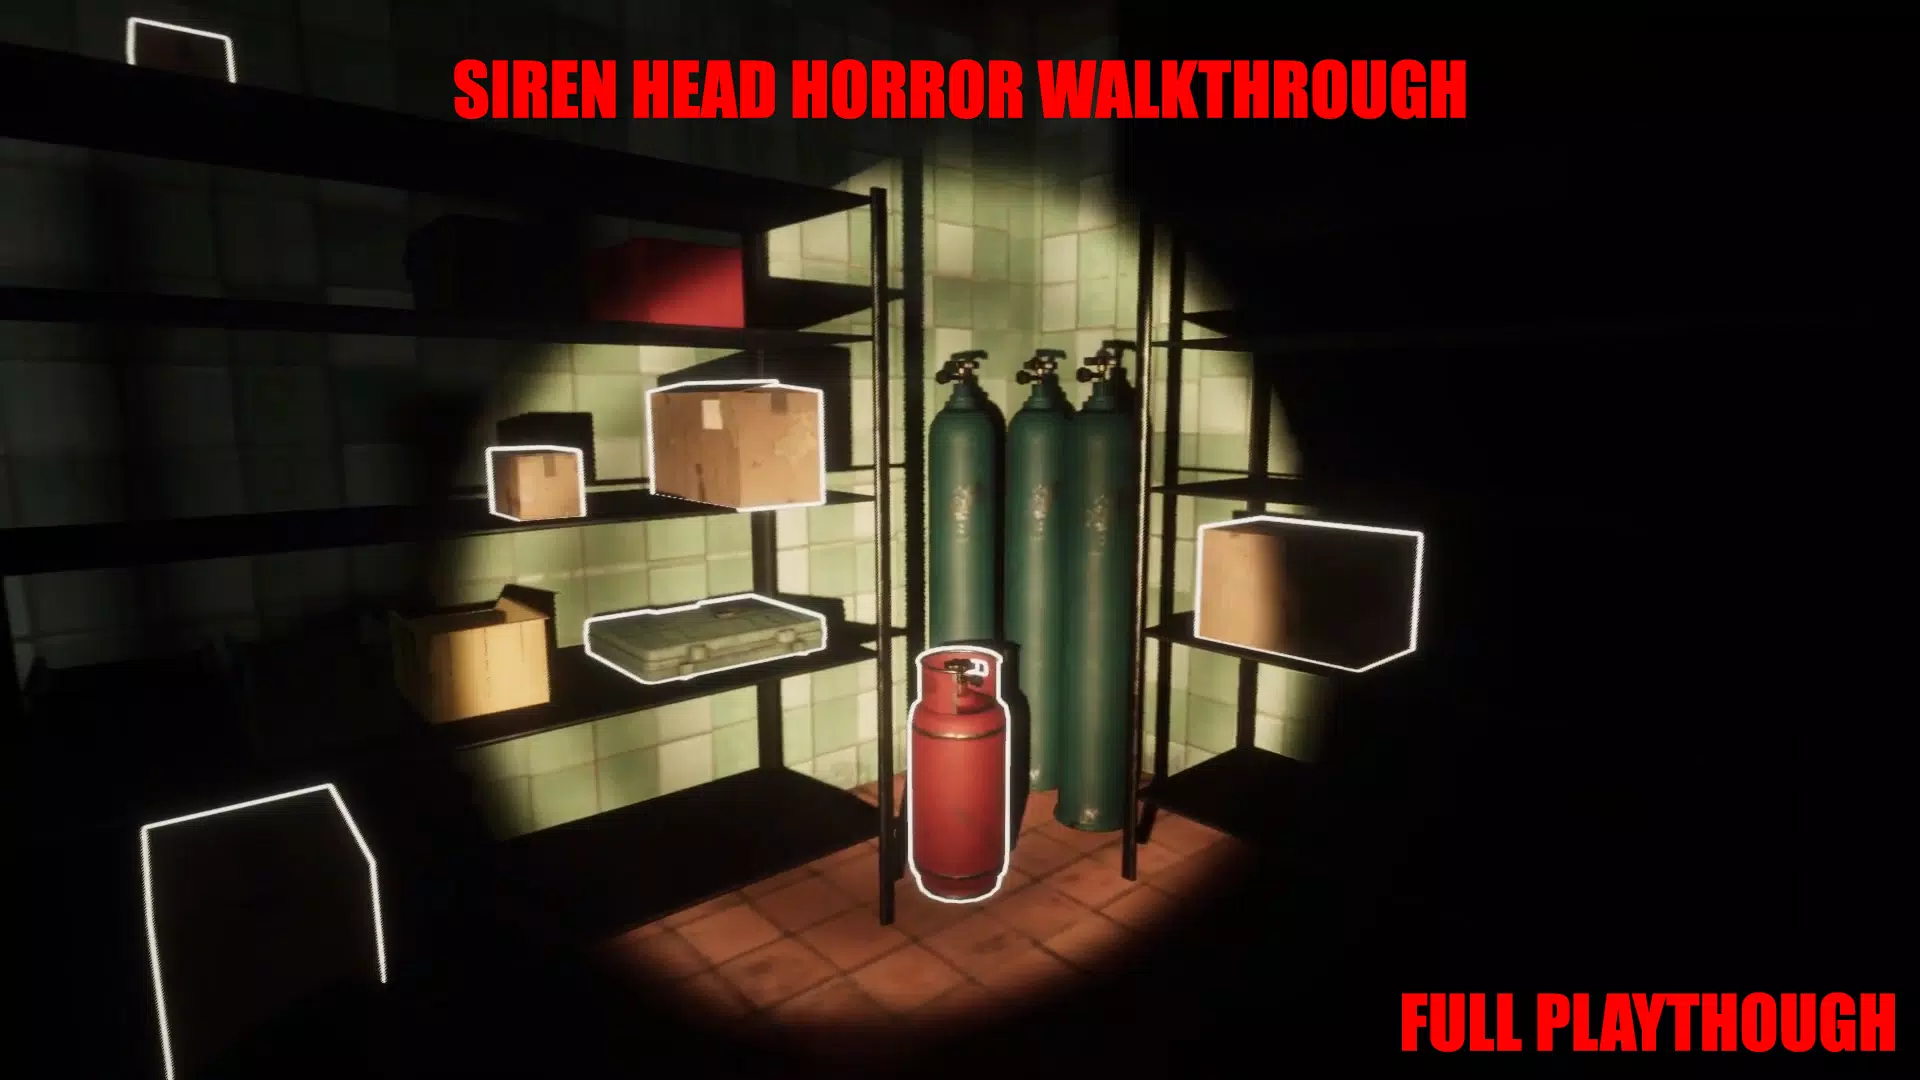 Siren Head: Retribution – Download Game